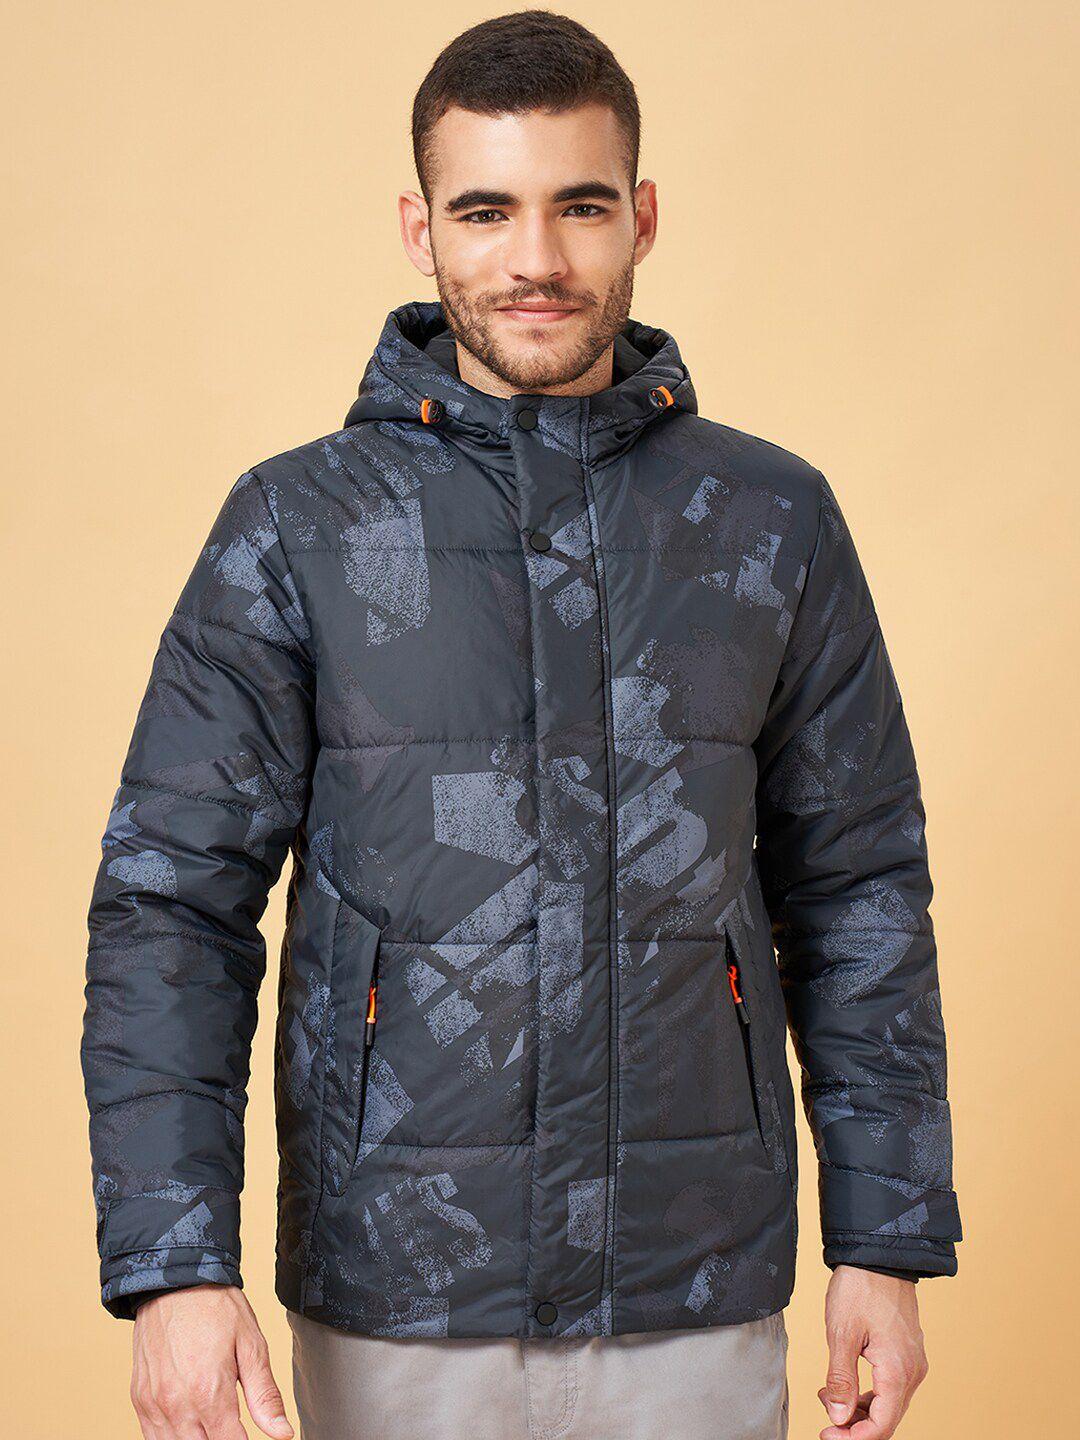 urban-ranger-by-pantaloons-geometric-printed-padded-jacket